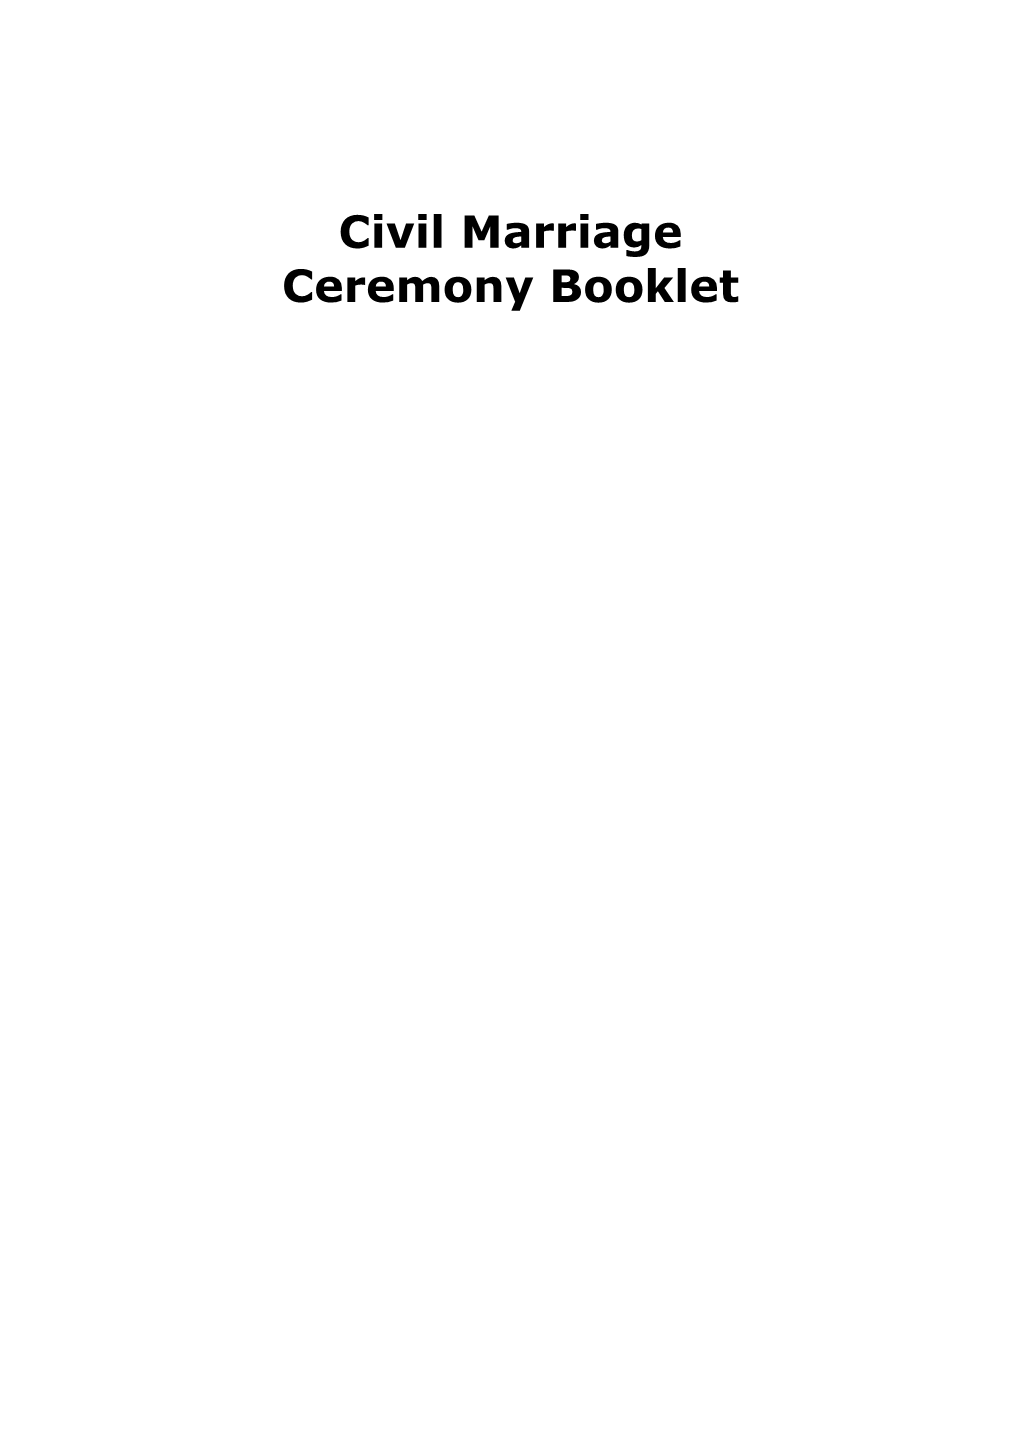 Civil Marriage Ceremony Booklet INDEX